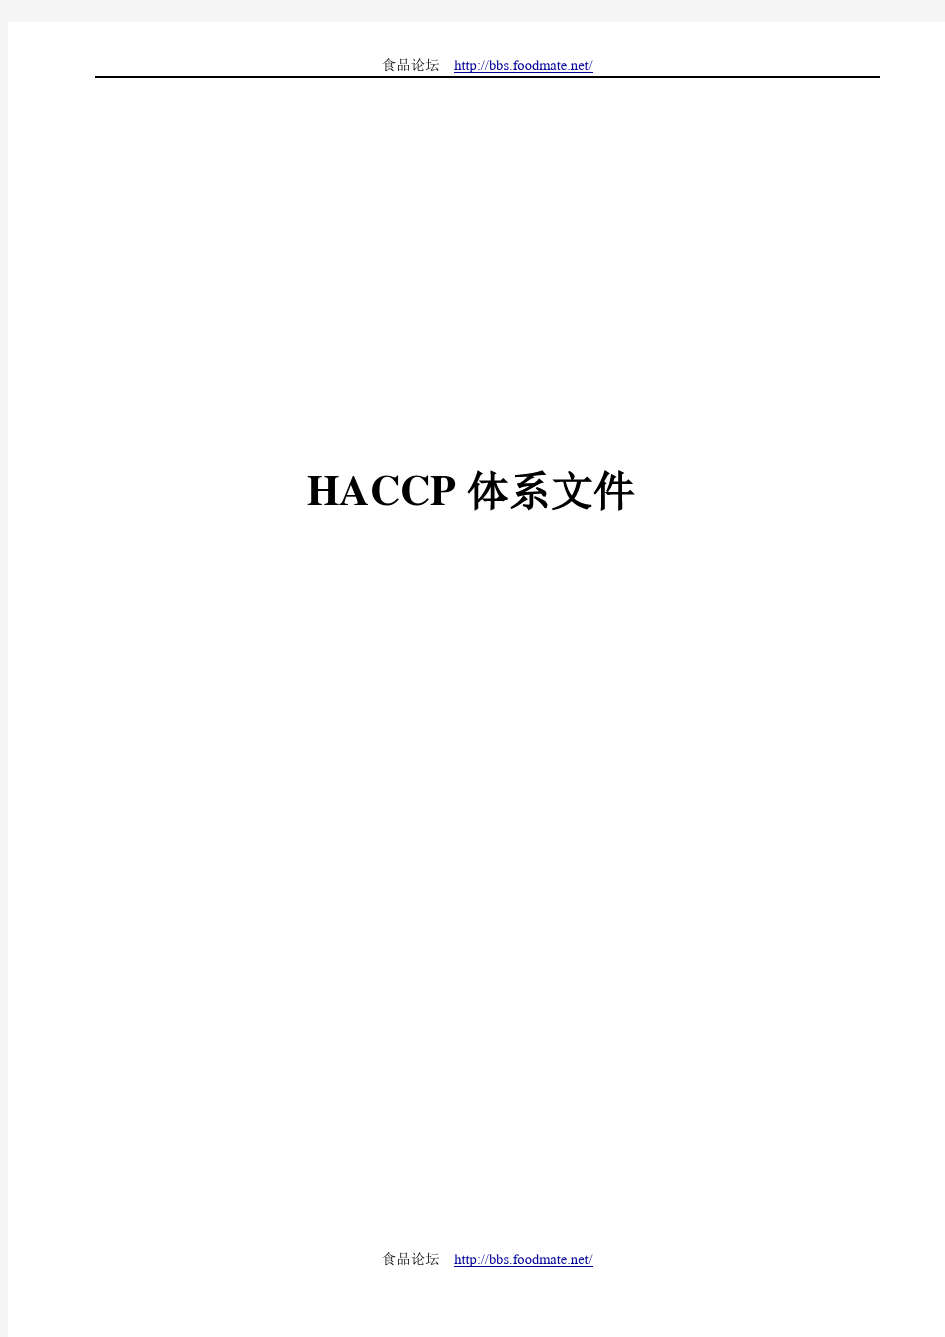 HACCP体系文件